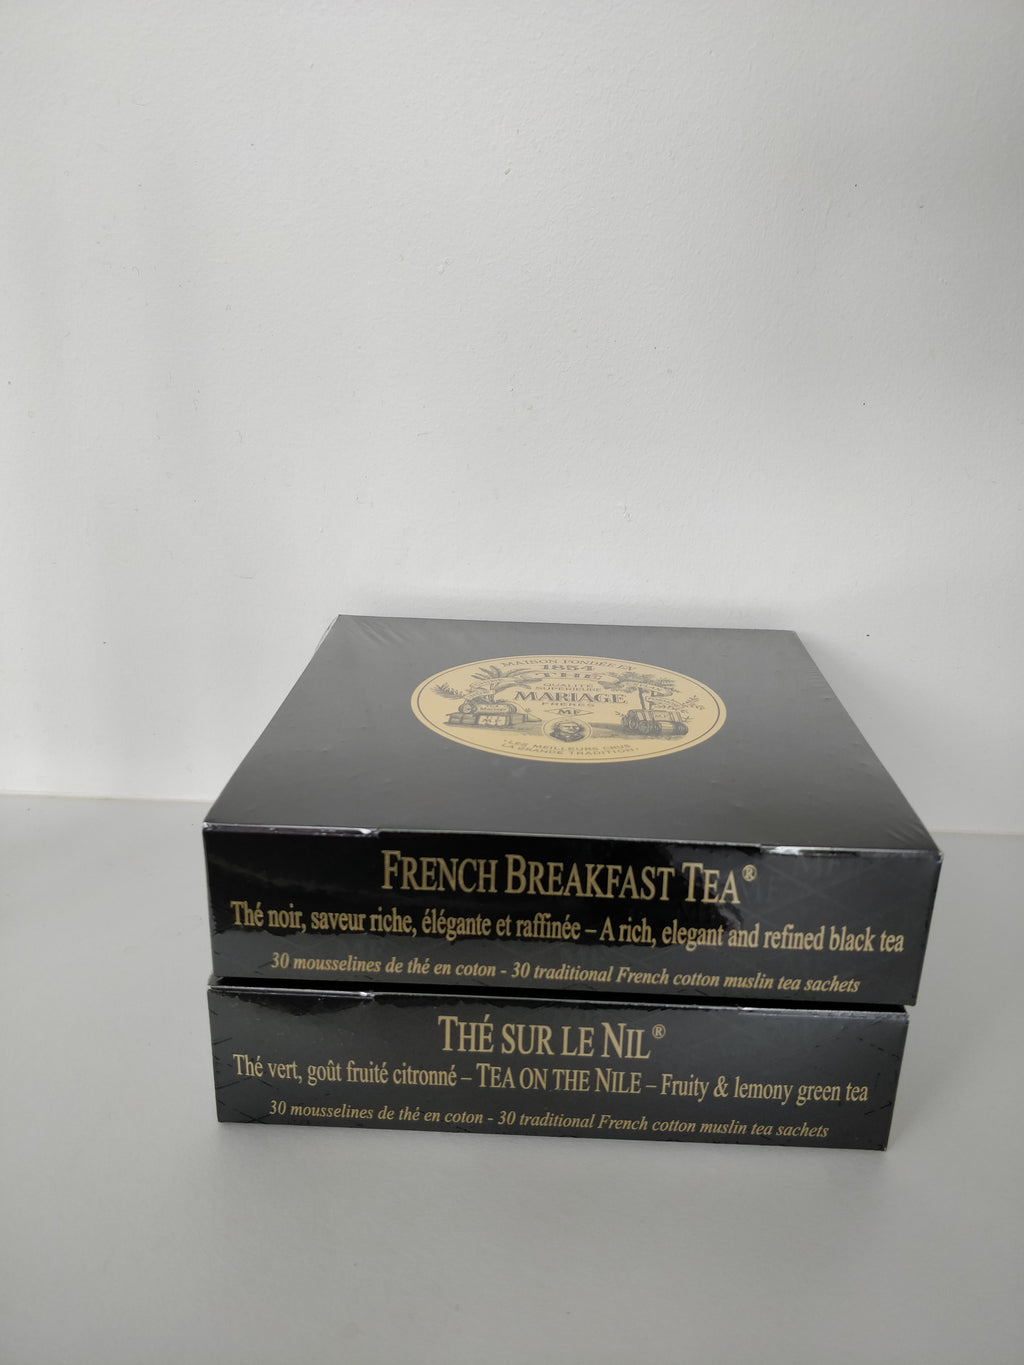 Mariage Freres - RUSSIAN BREAKFAST TEA® - Box of 30 muslin tea sachets /  bags